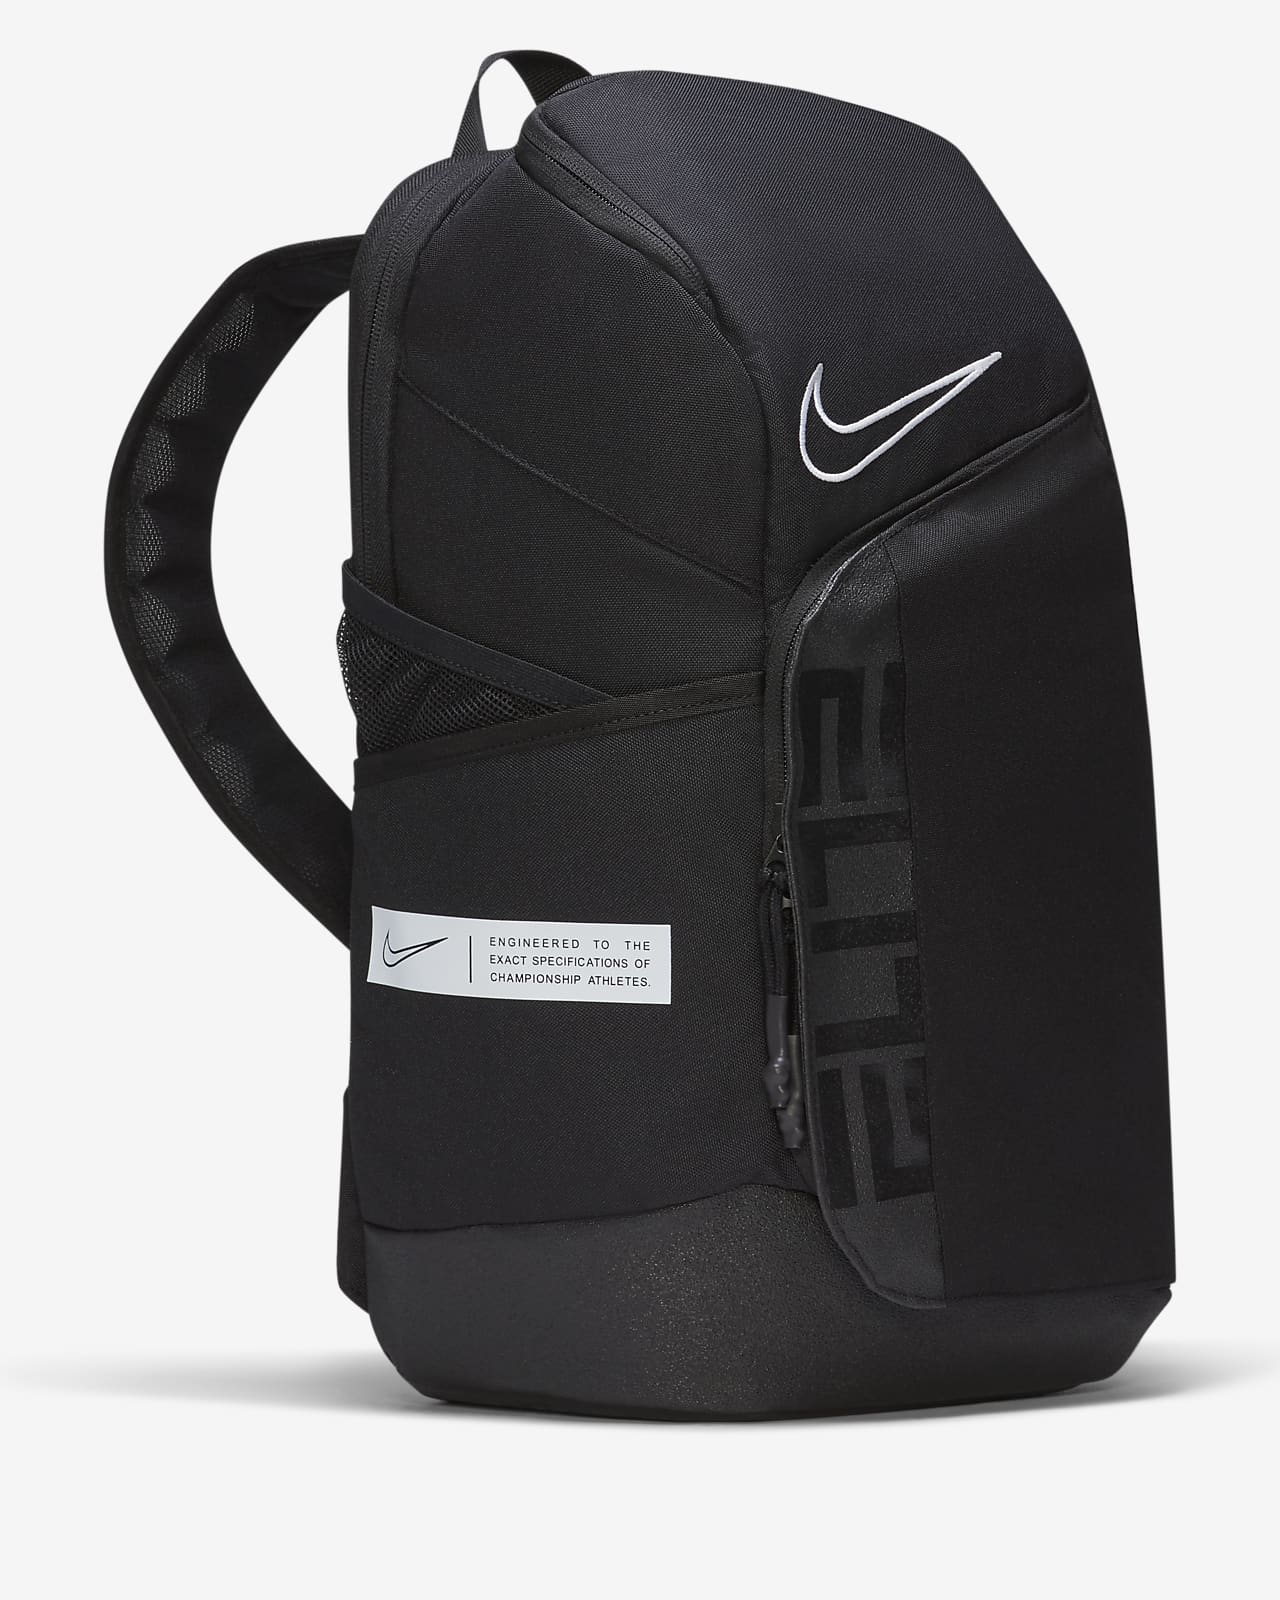 basketball backpack nike elite pro